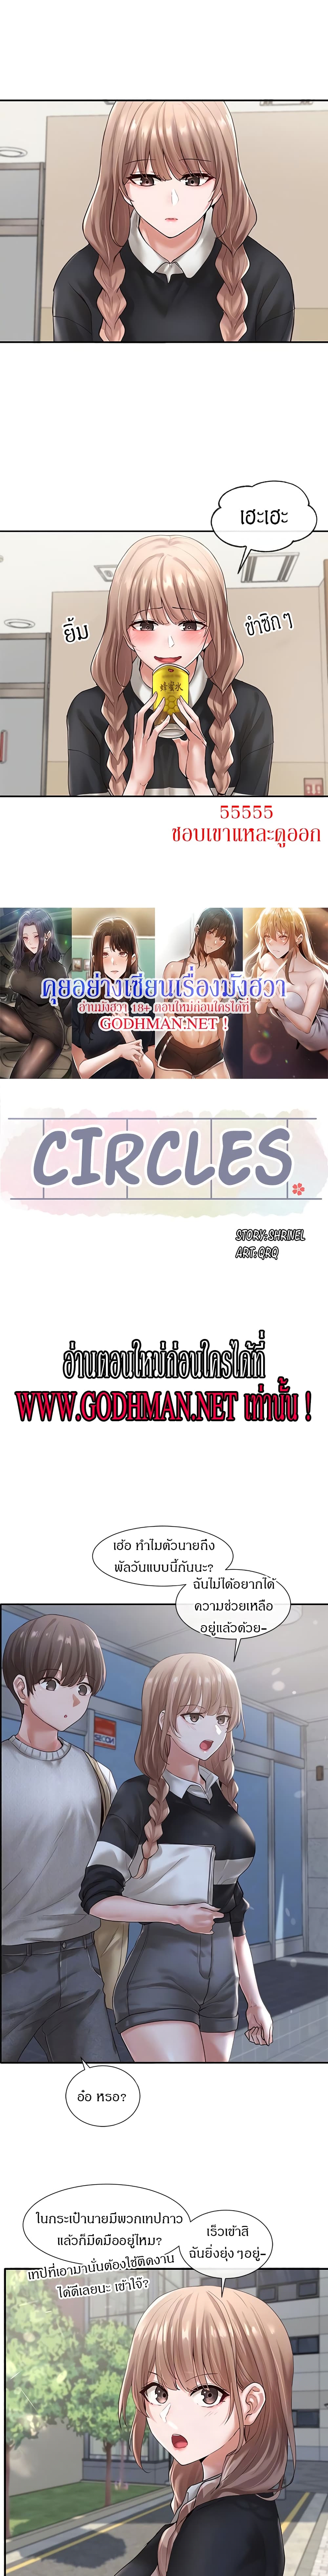 Theater Society (Circles) 52 05